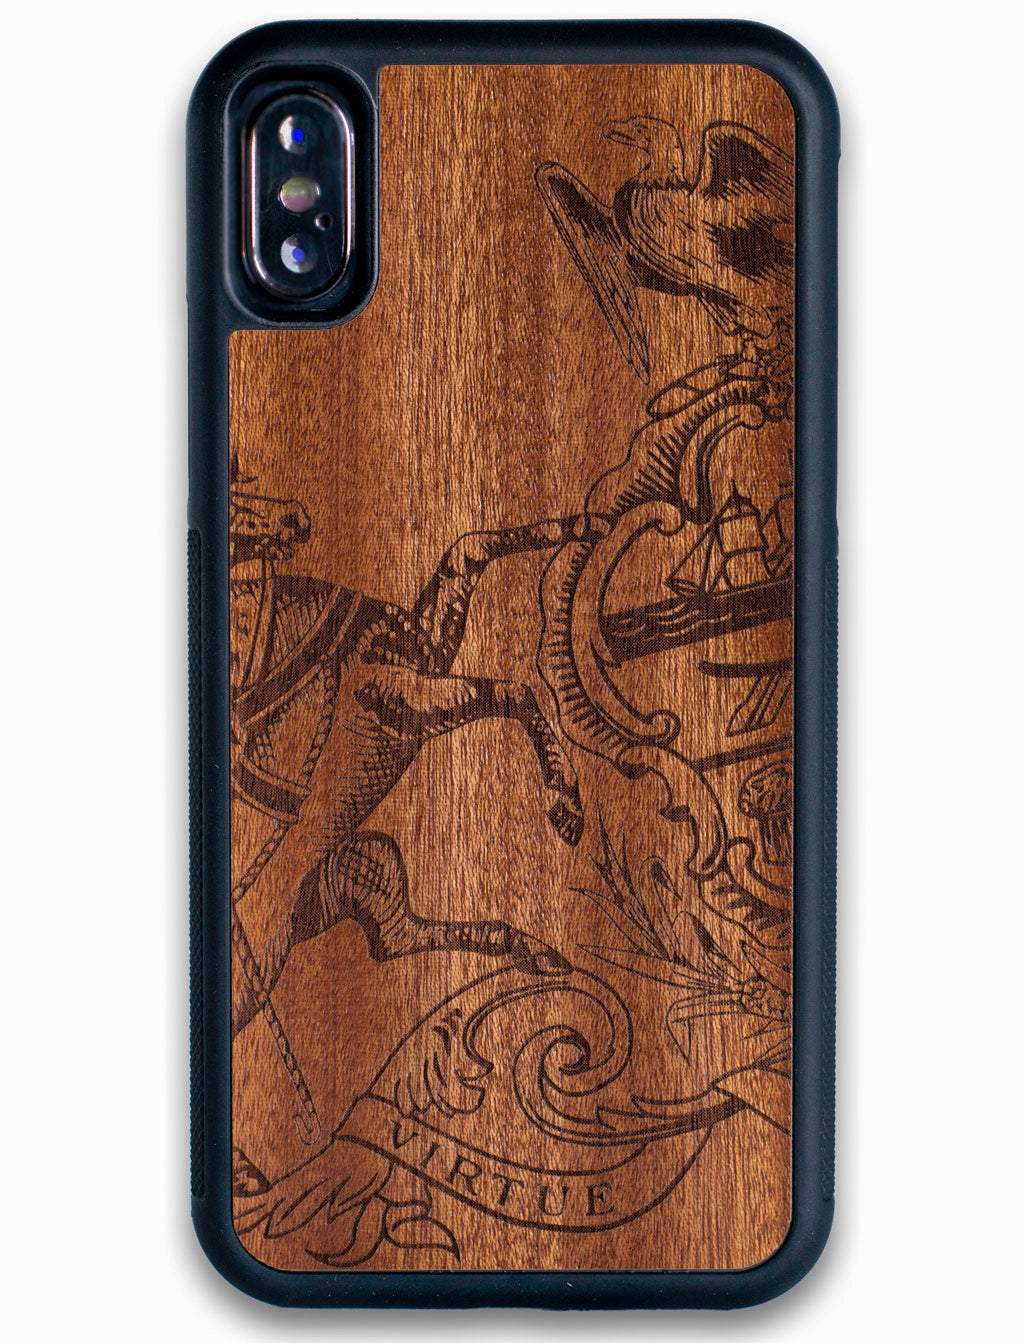 Pennsylvania flag wooden iPhone X case